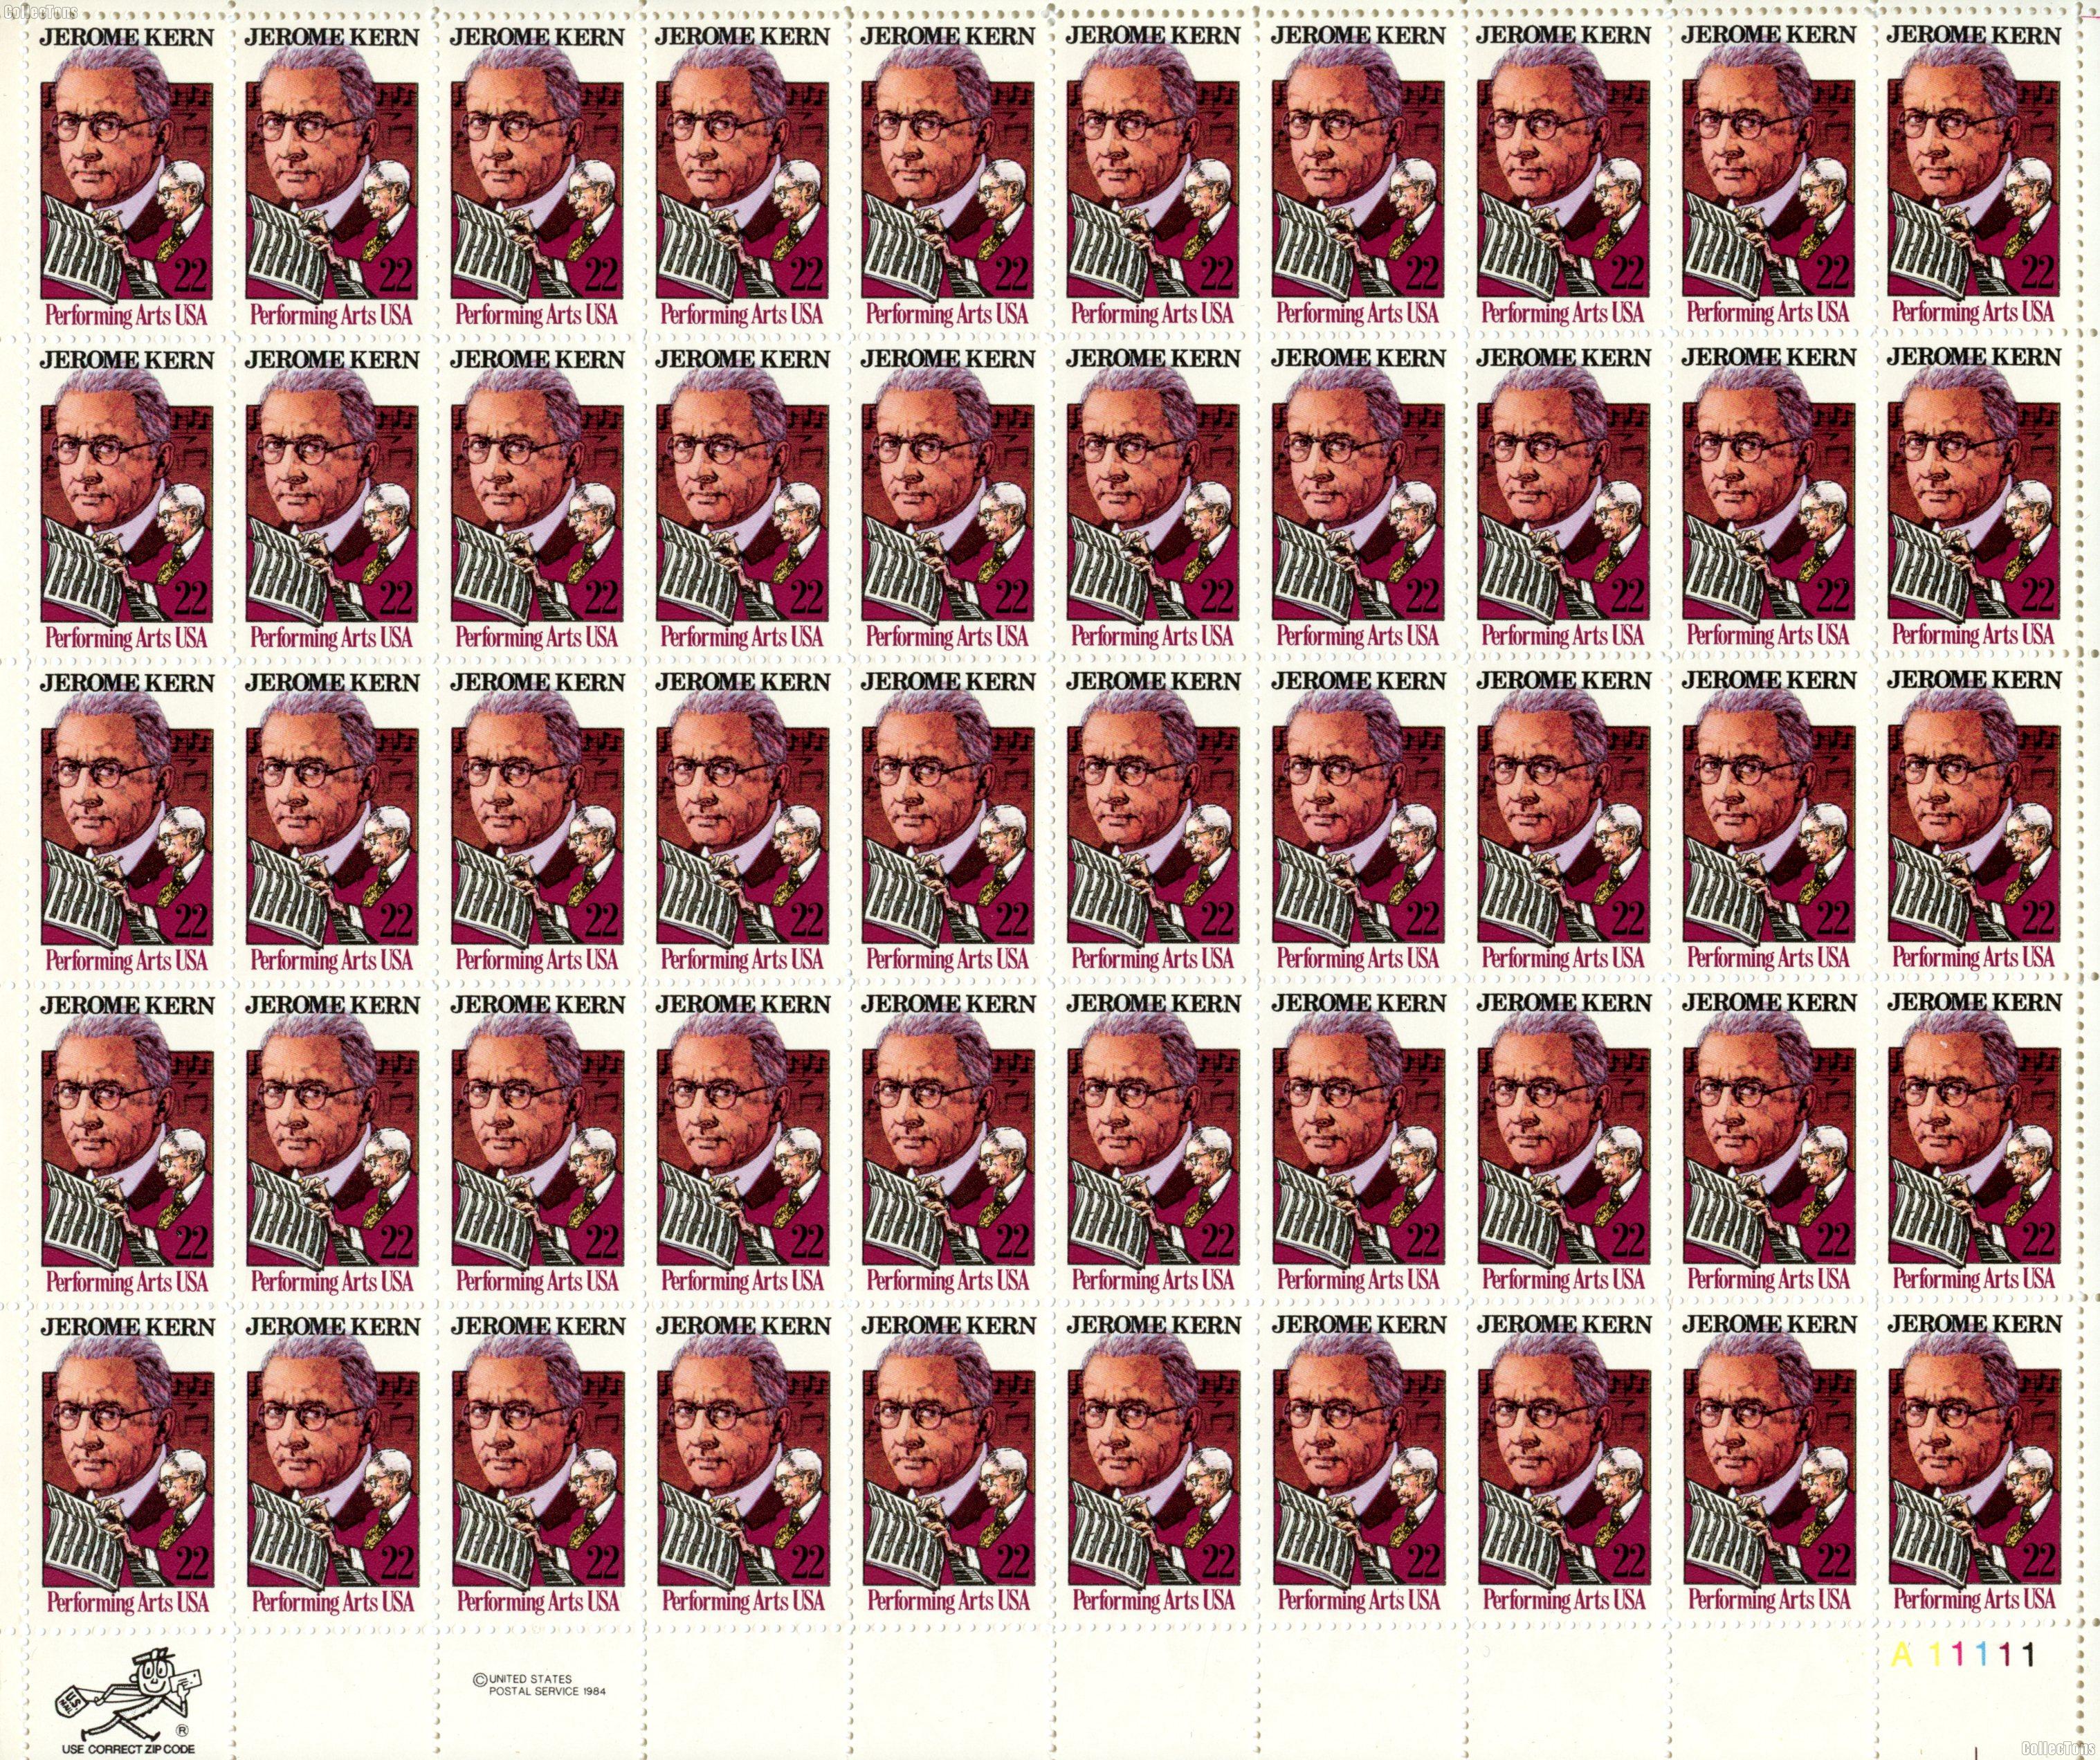 1985 Jerome Kern 22 Cent US Postage Stamp MNH Sheet of 50 Scott #2110